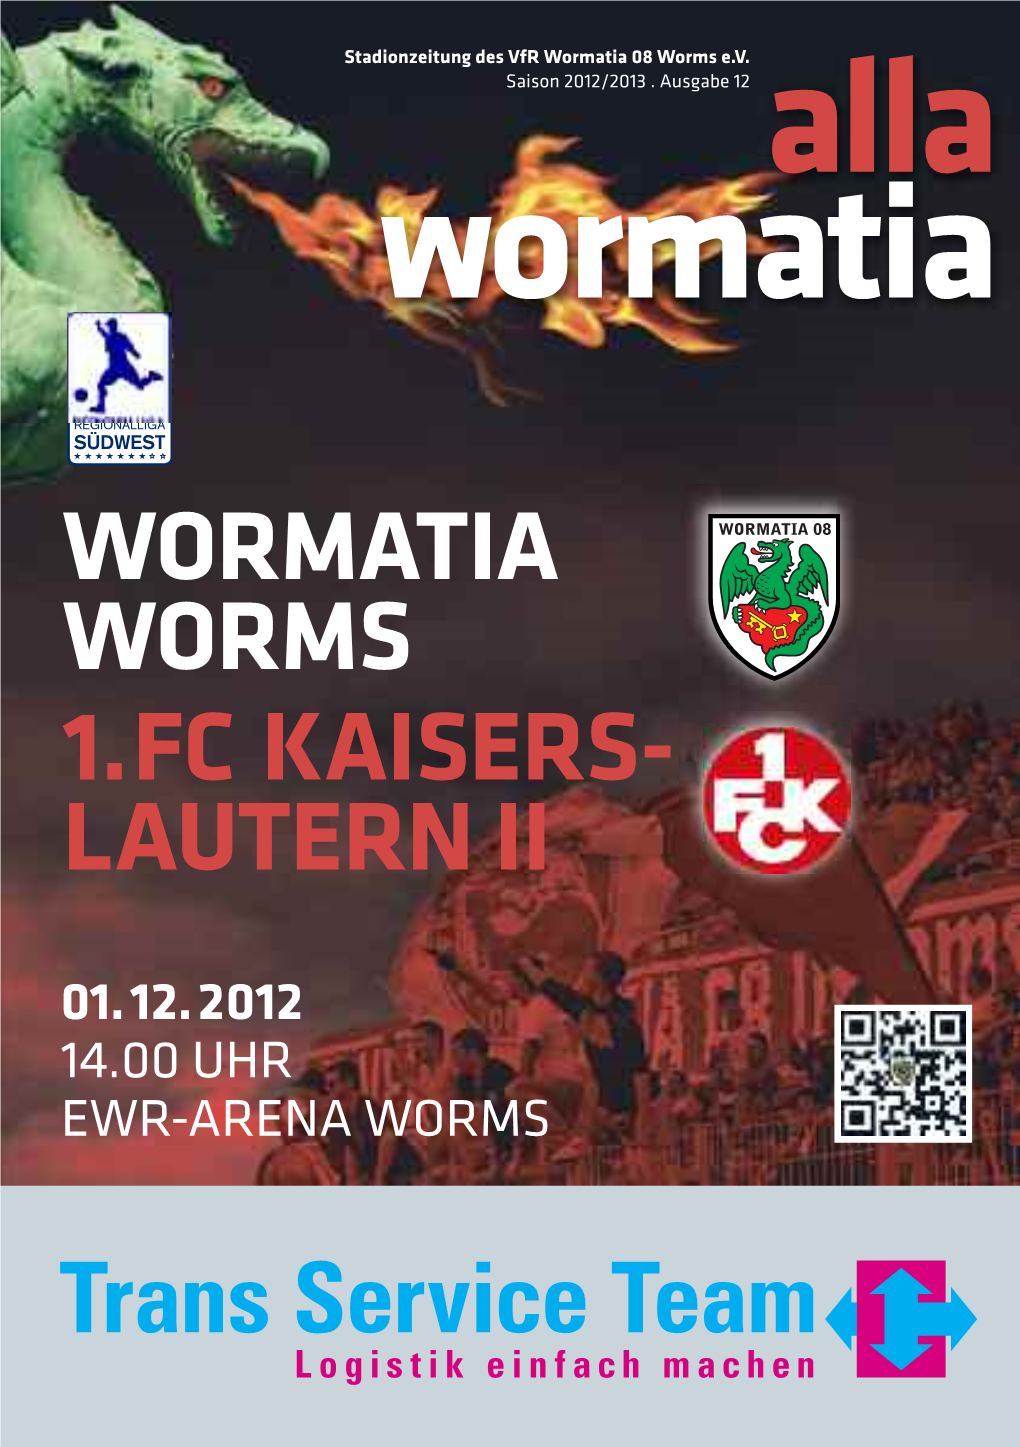 Wormatia Worms 1.Fc Kaisers- Lautern Ii